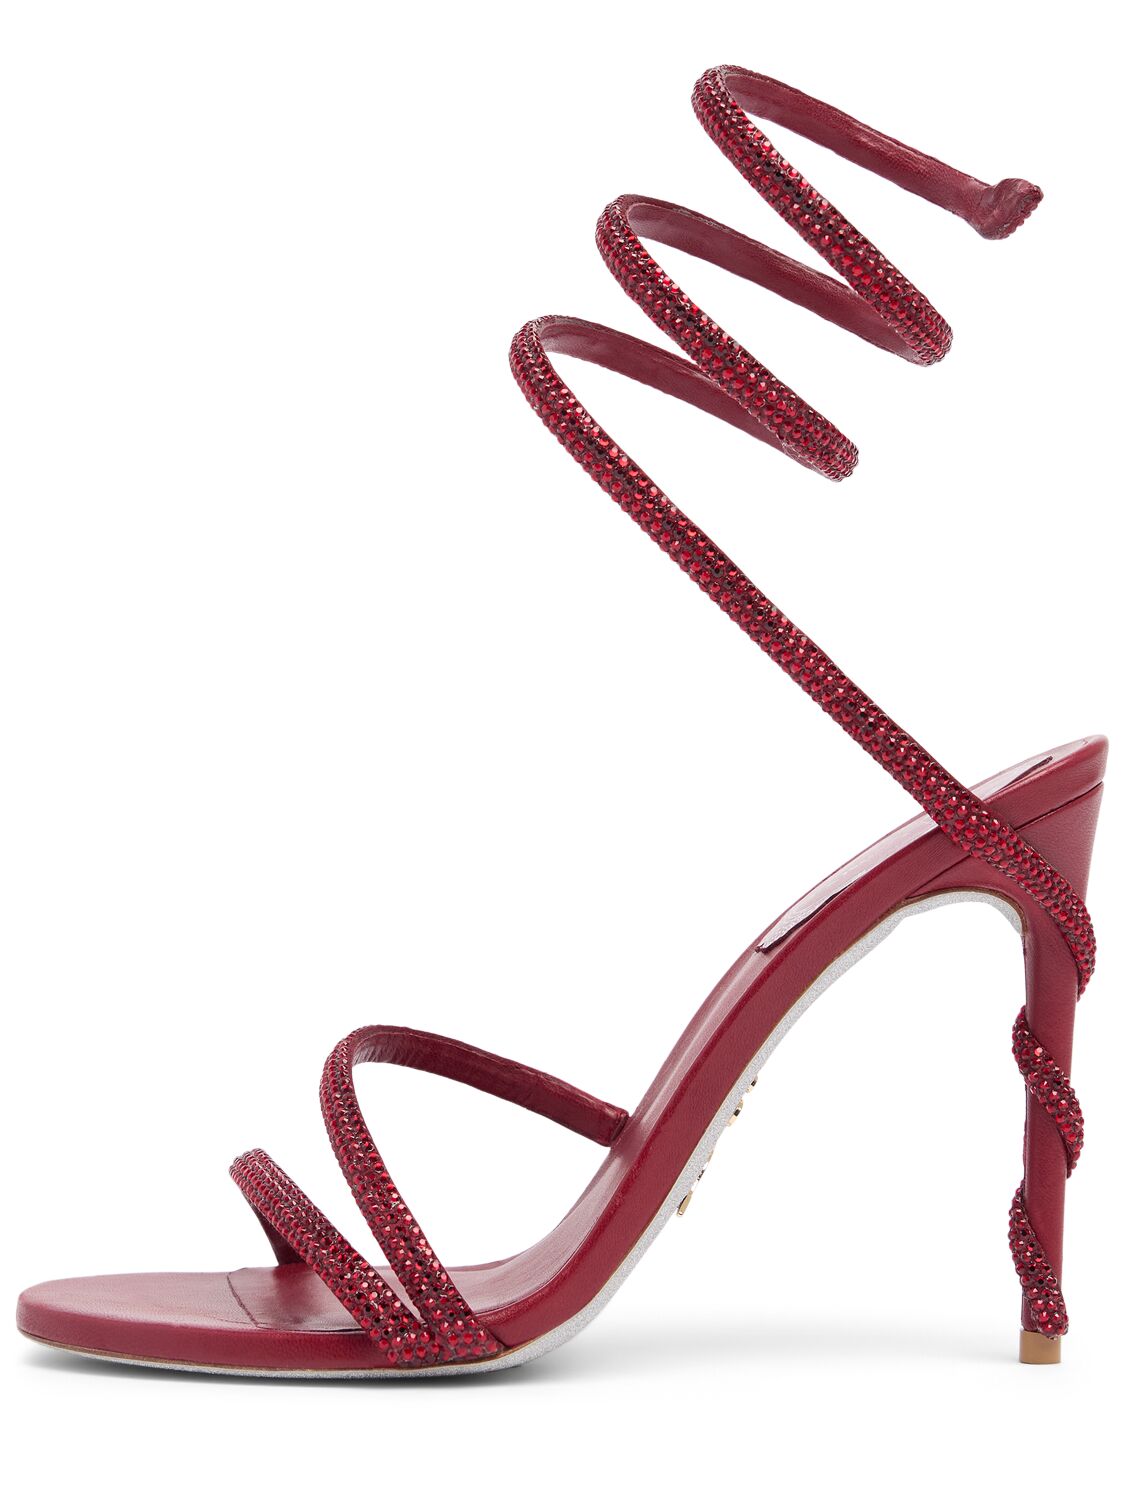 René Caovilla 105mm Margot Satin & Crystal Sandals In Burgundy